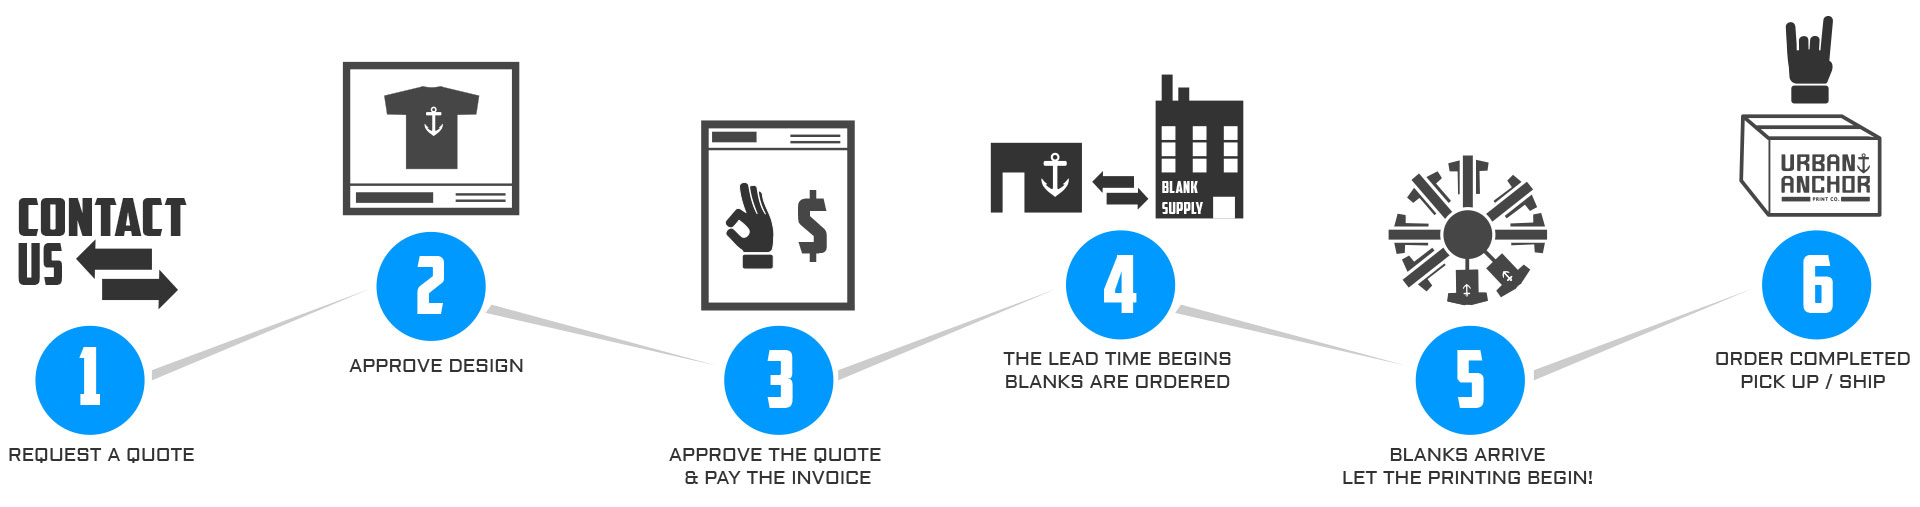 Screen Printing order process